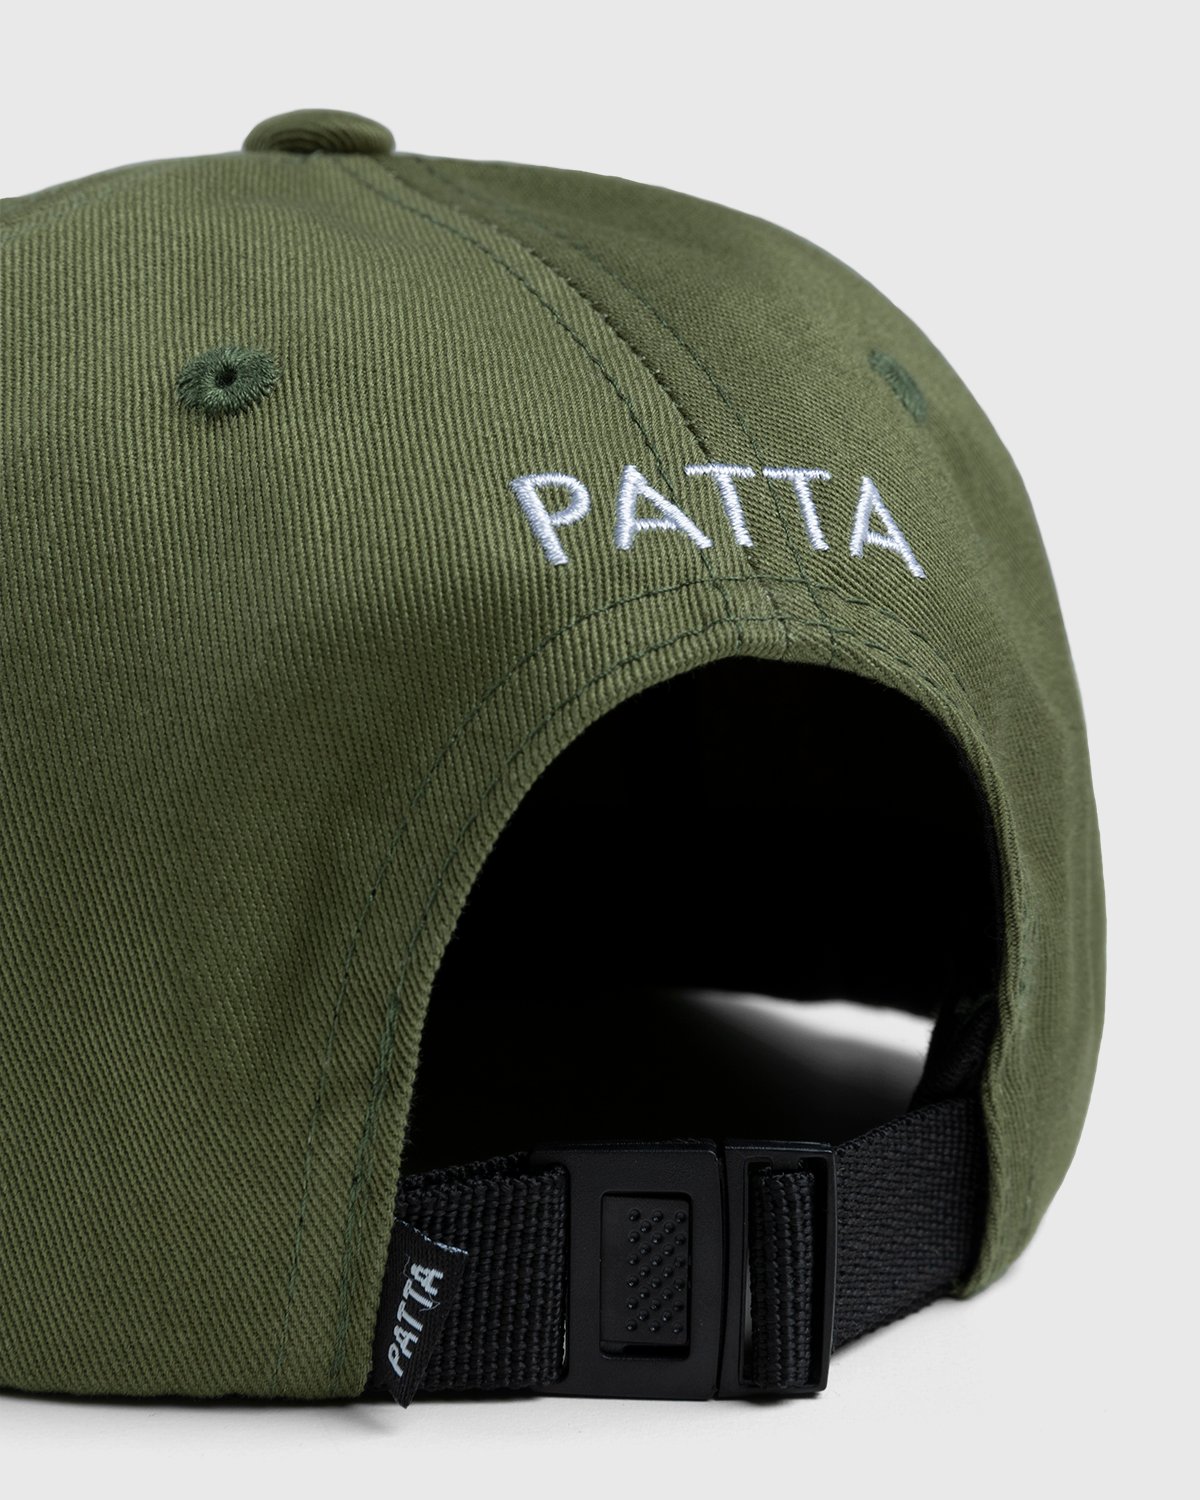 Patta - Script P Sports Cap Olivine - Accessories - Green - Image 6